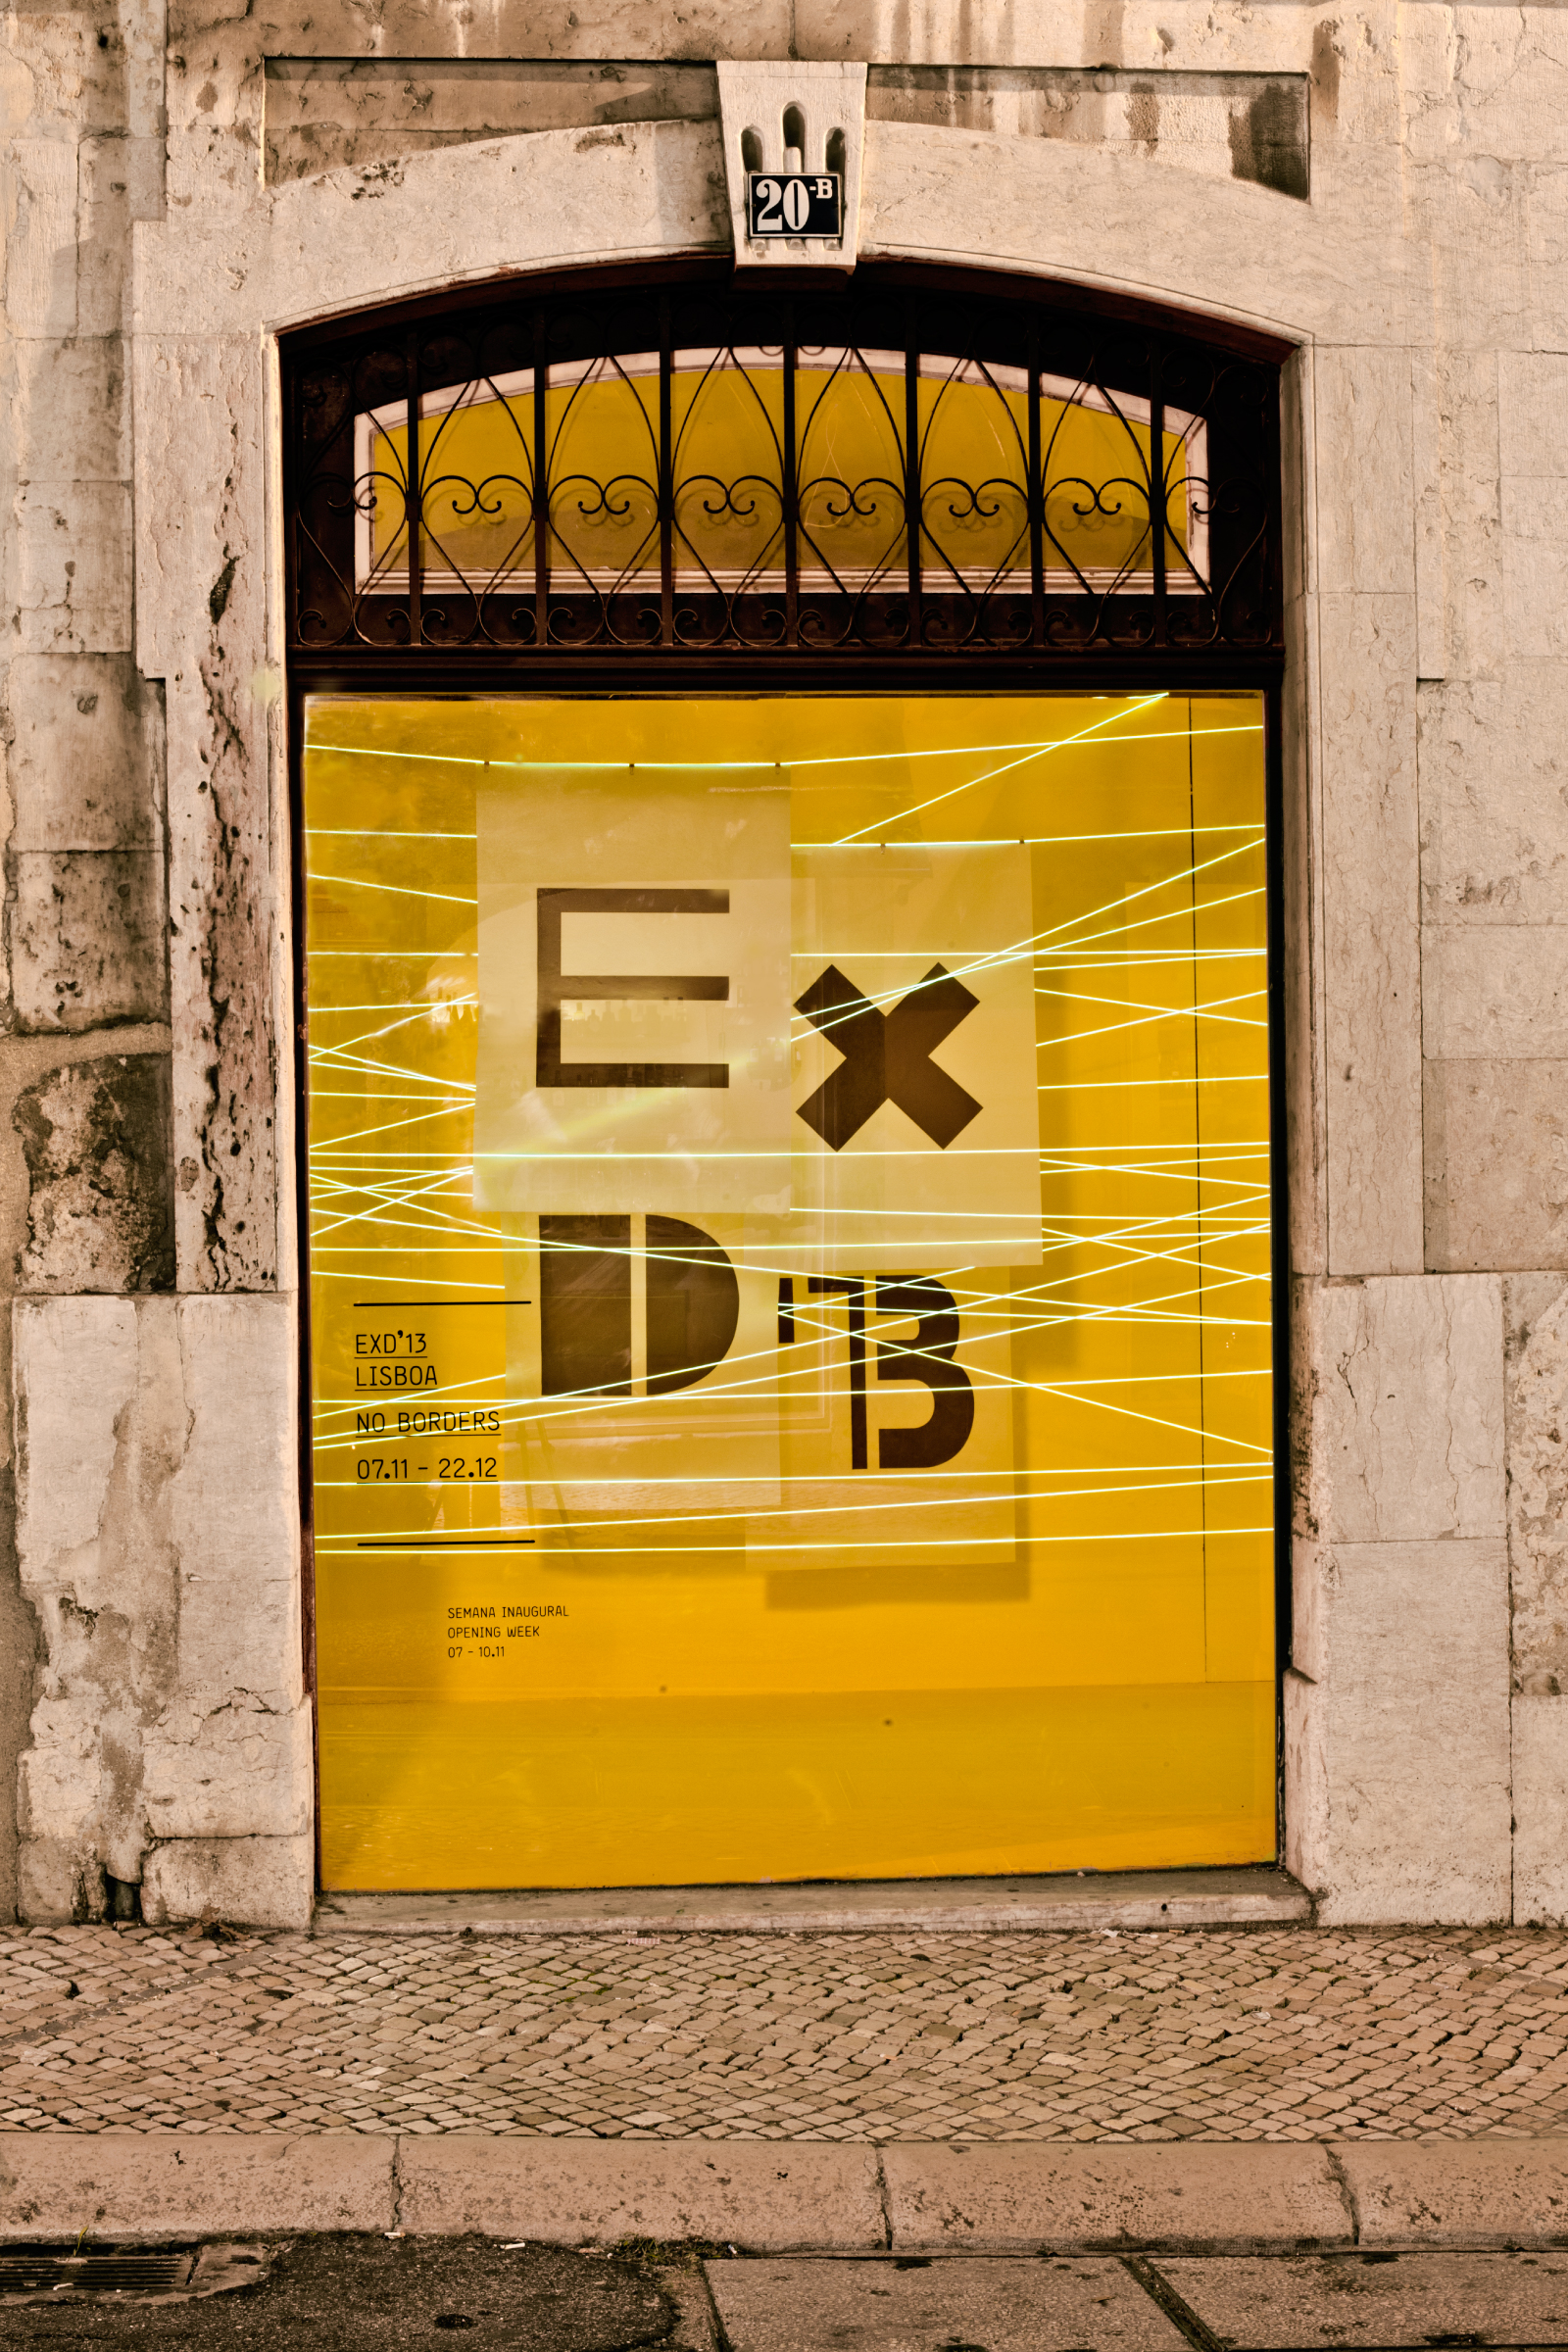 EXD'13 ⟐ Show window